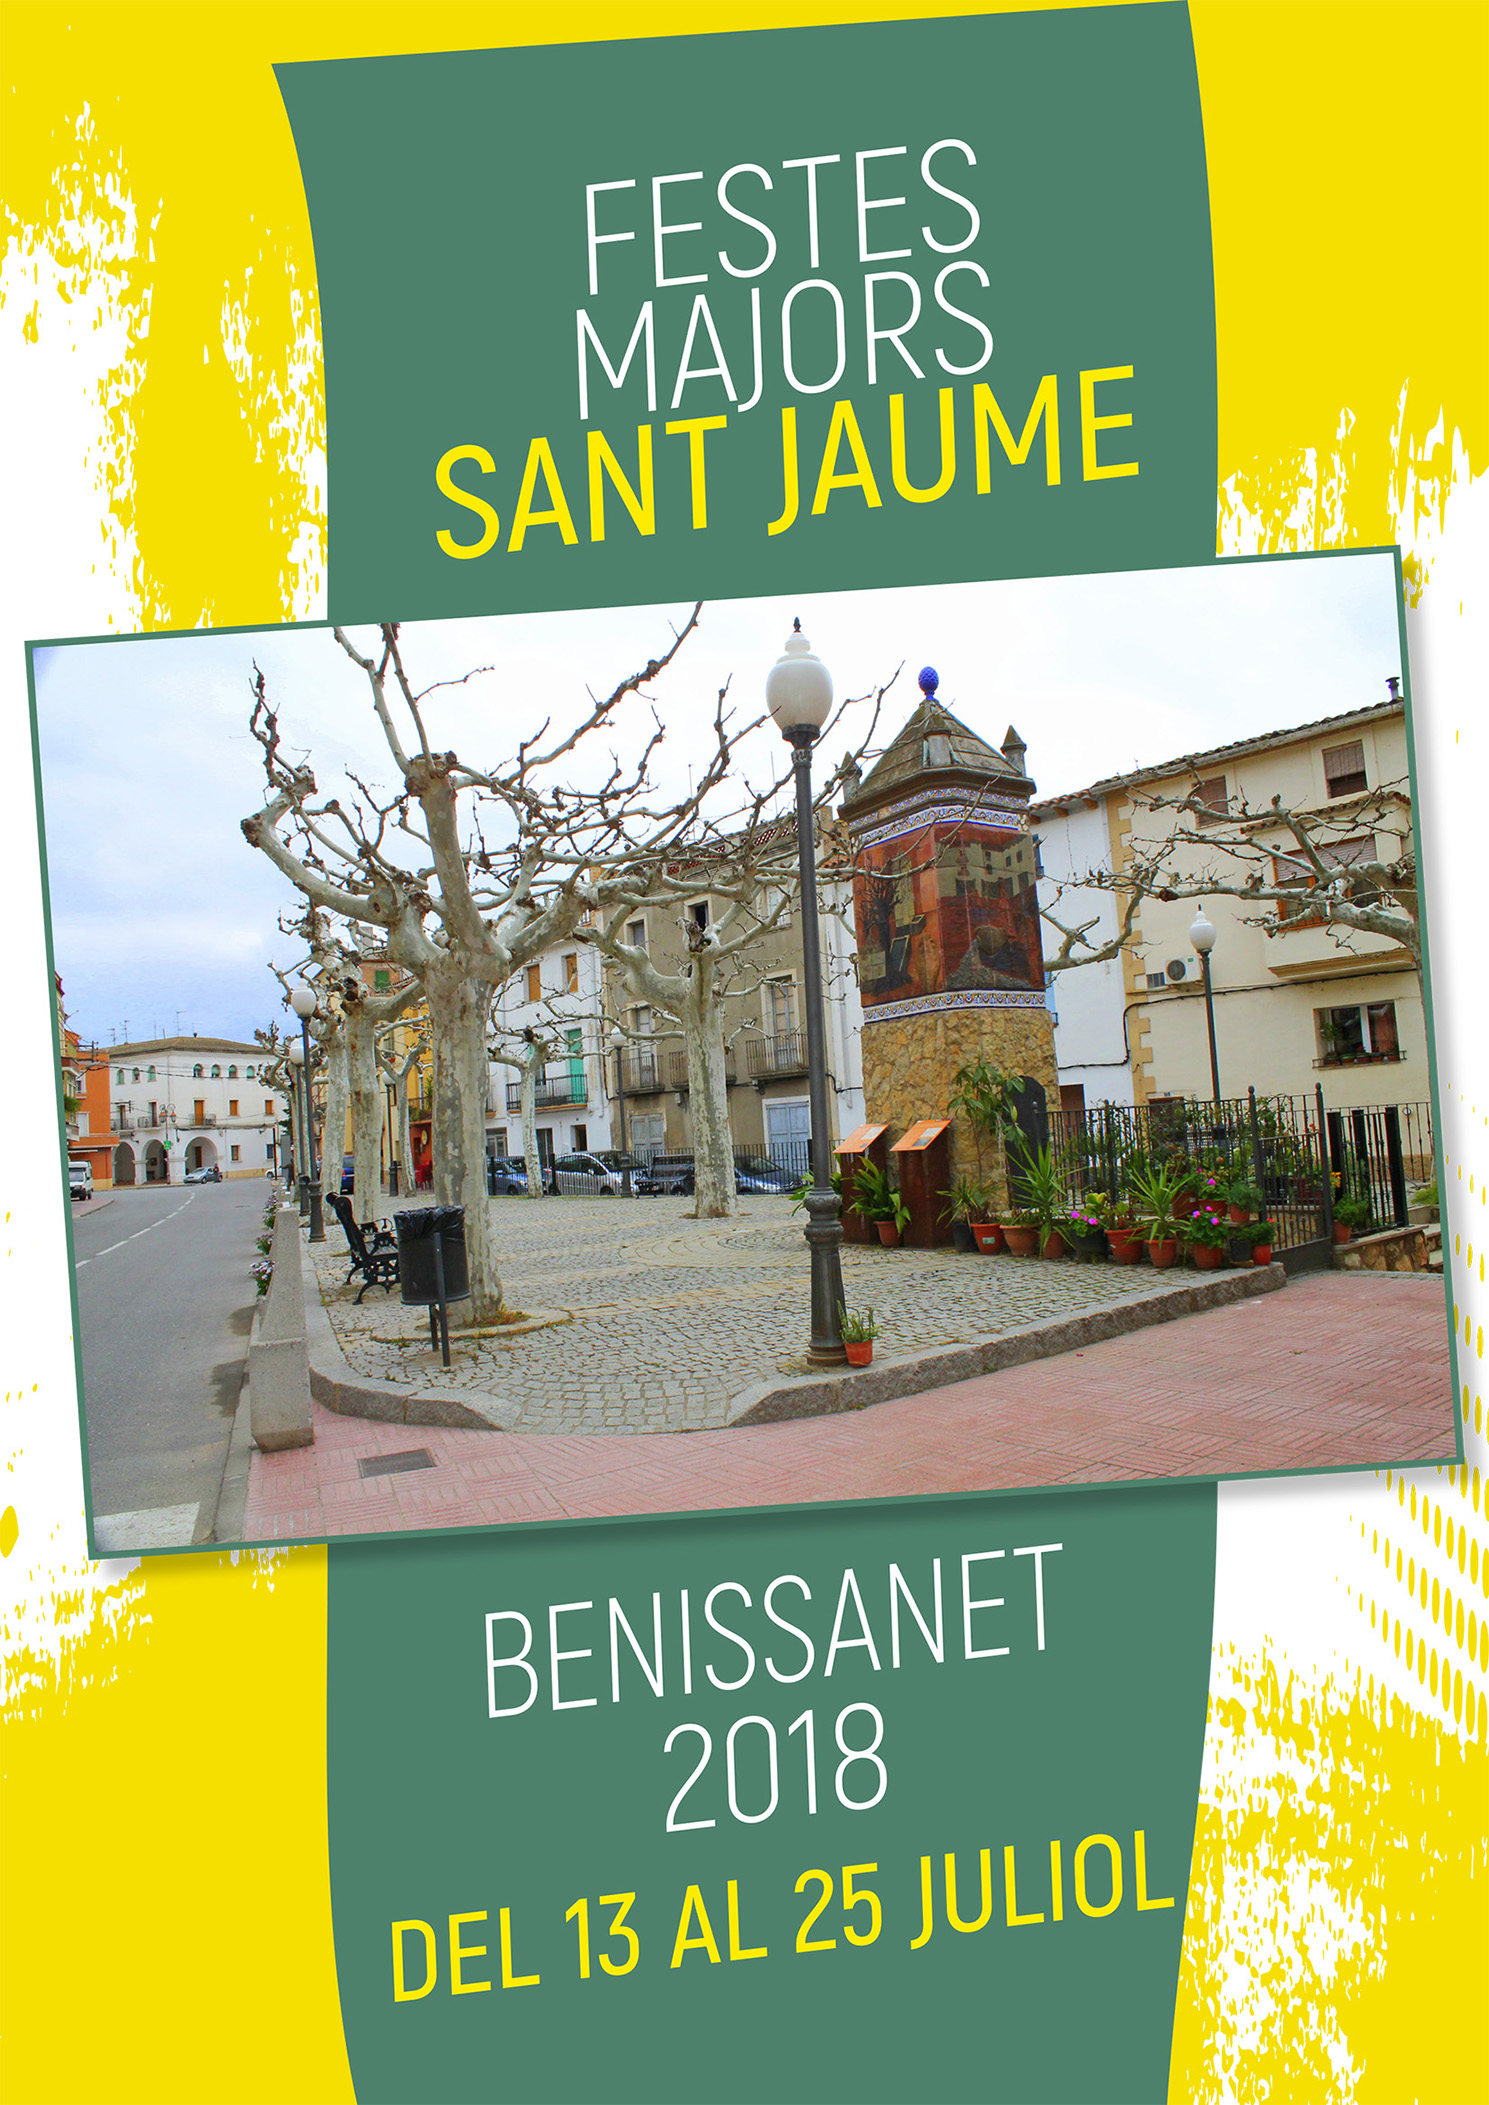 Portada programa Festes Majors Sant Jaume 2018 Benissanet